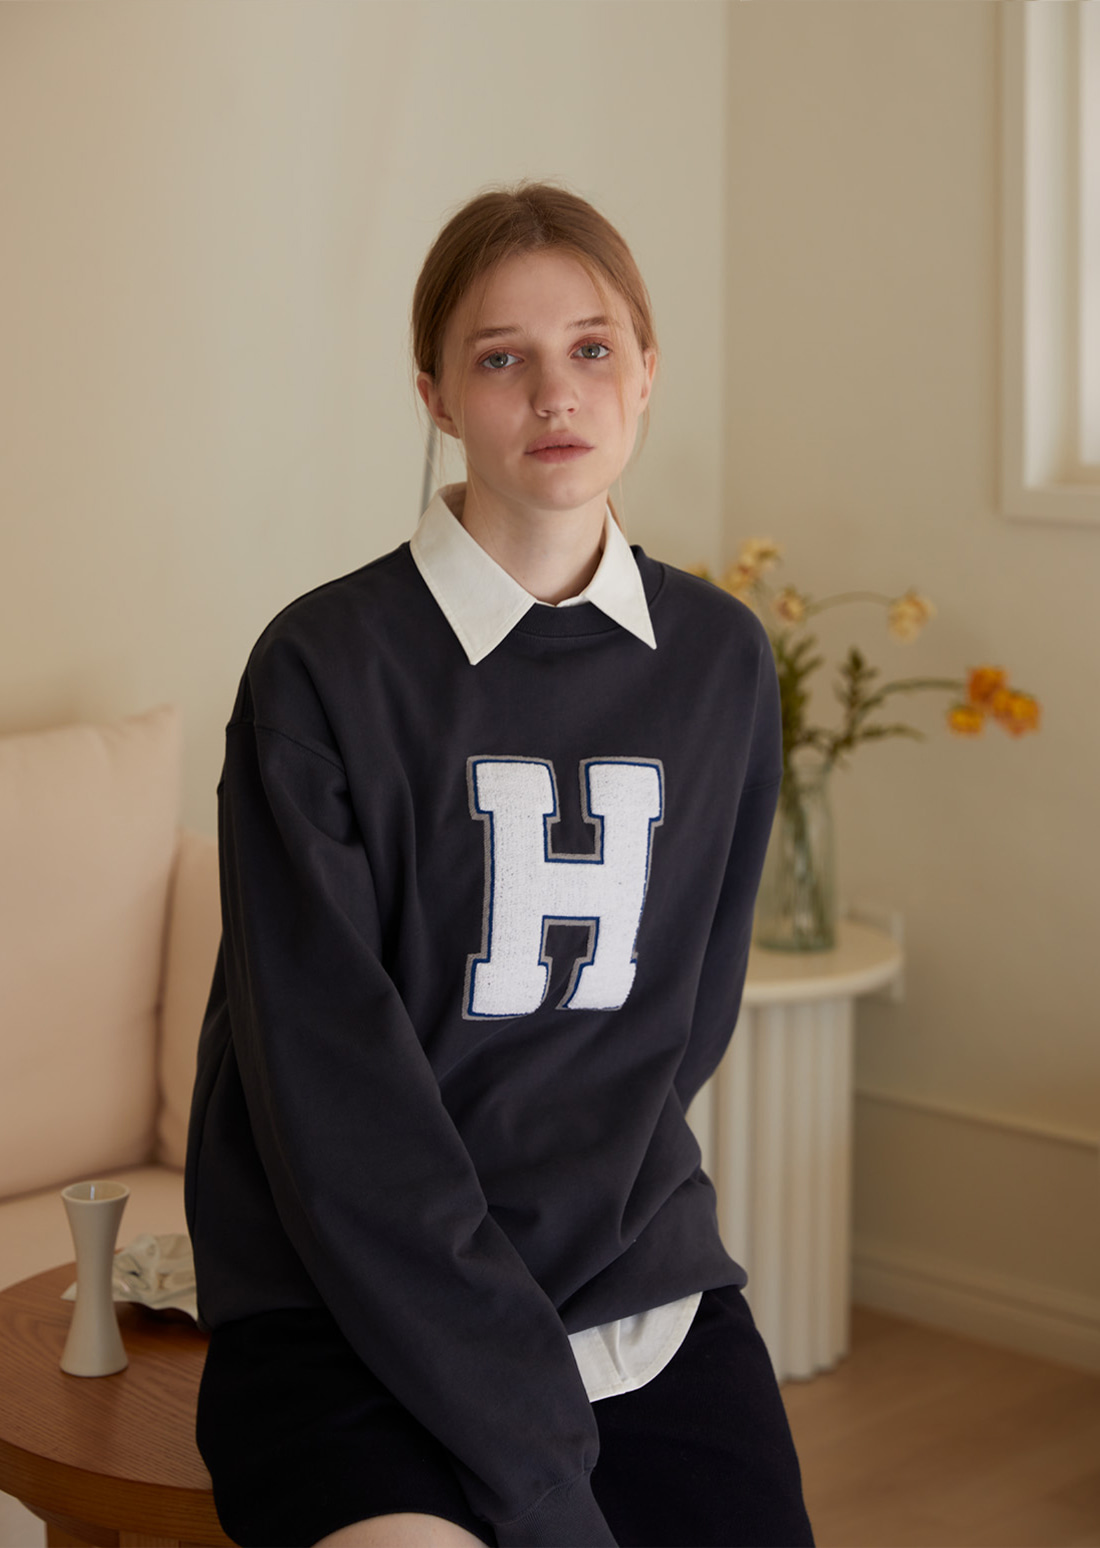 H Initial sweatshirts